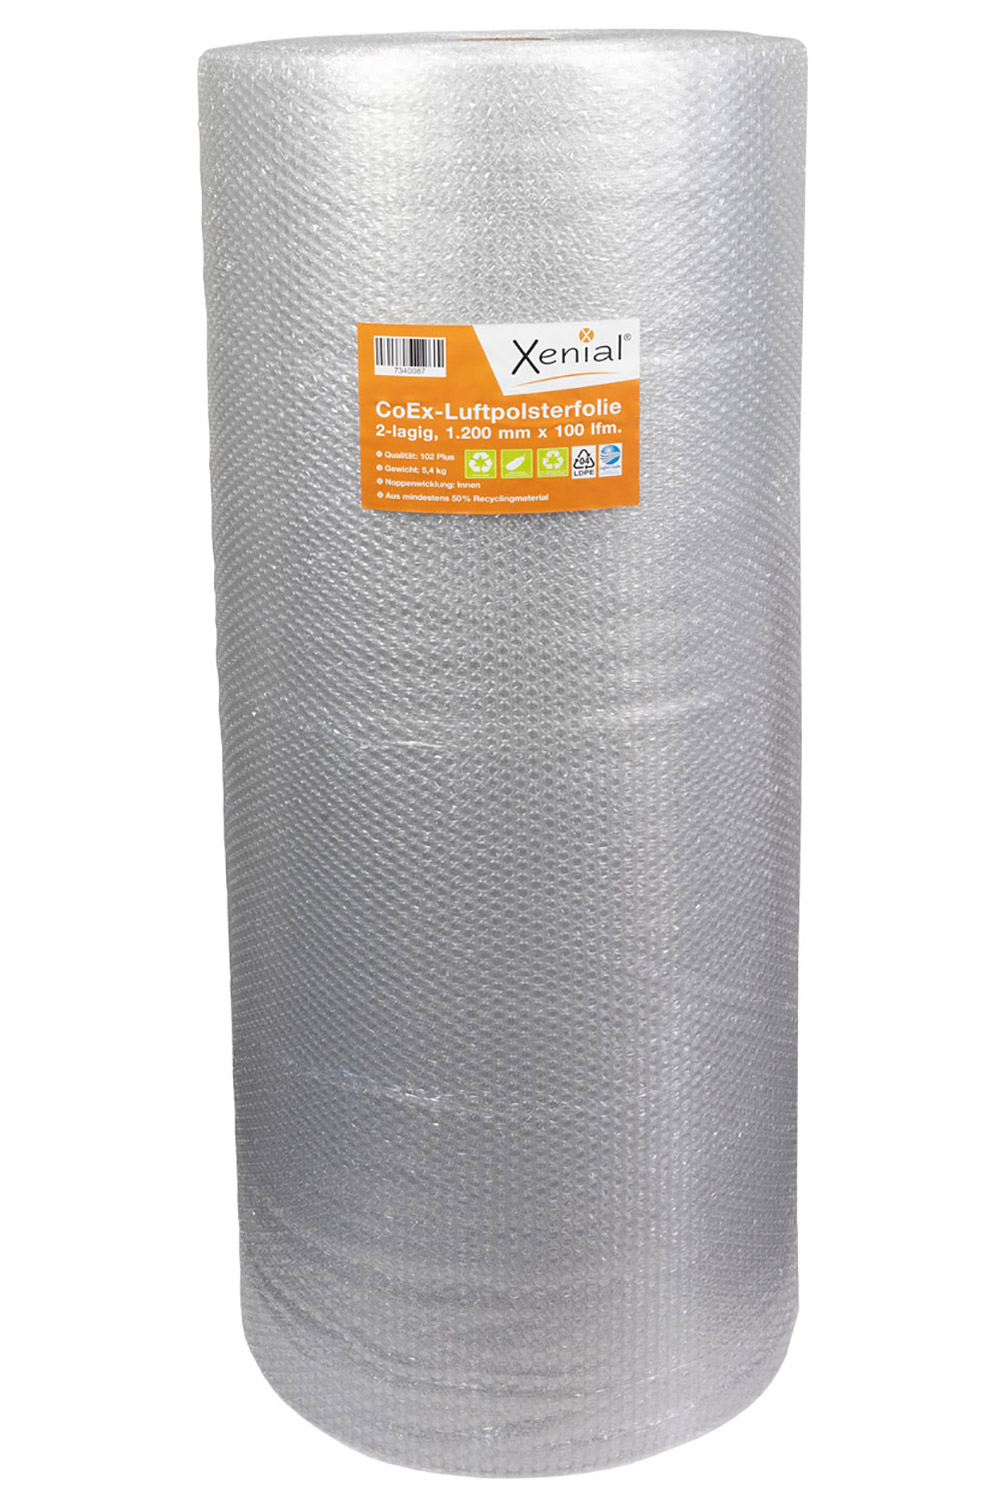 XENIAL CoEx-Luftpolsterfolie, 1200mm breitx100lfm, 50µ, grau, 2-lagig, mit mind. 50% Recyclinganteil | VE = 1 Stk.